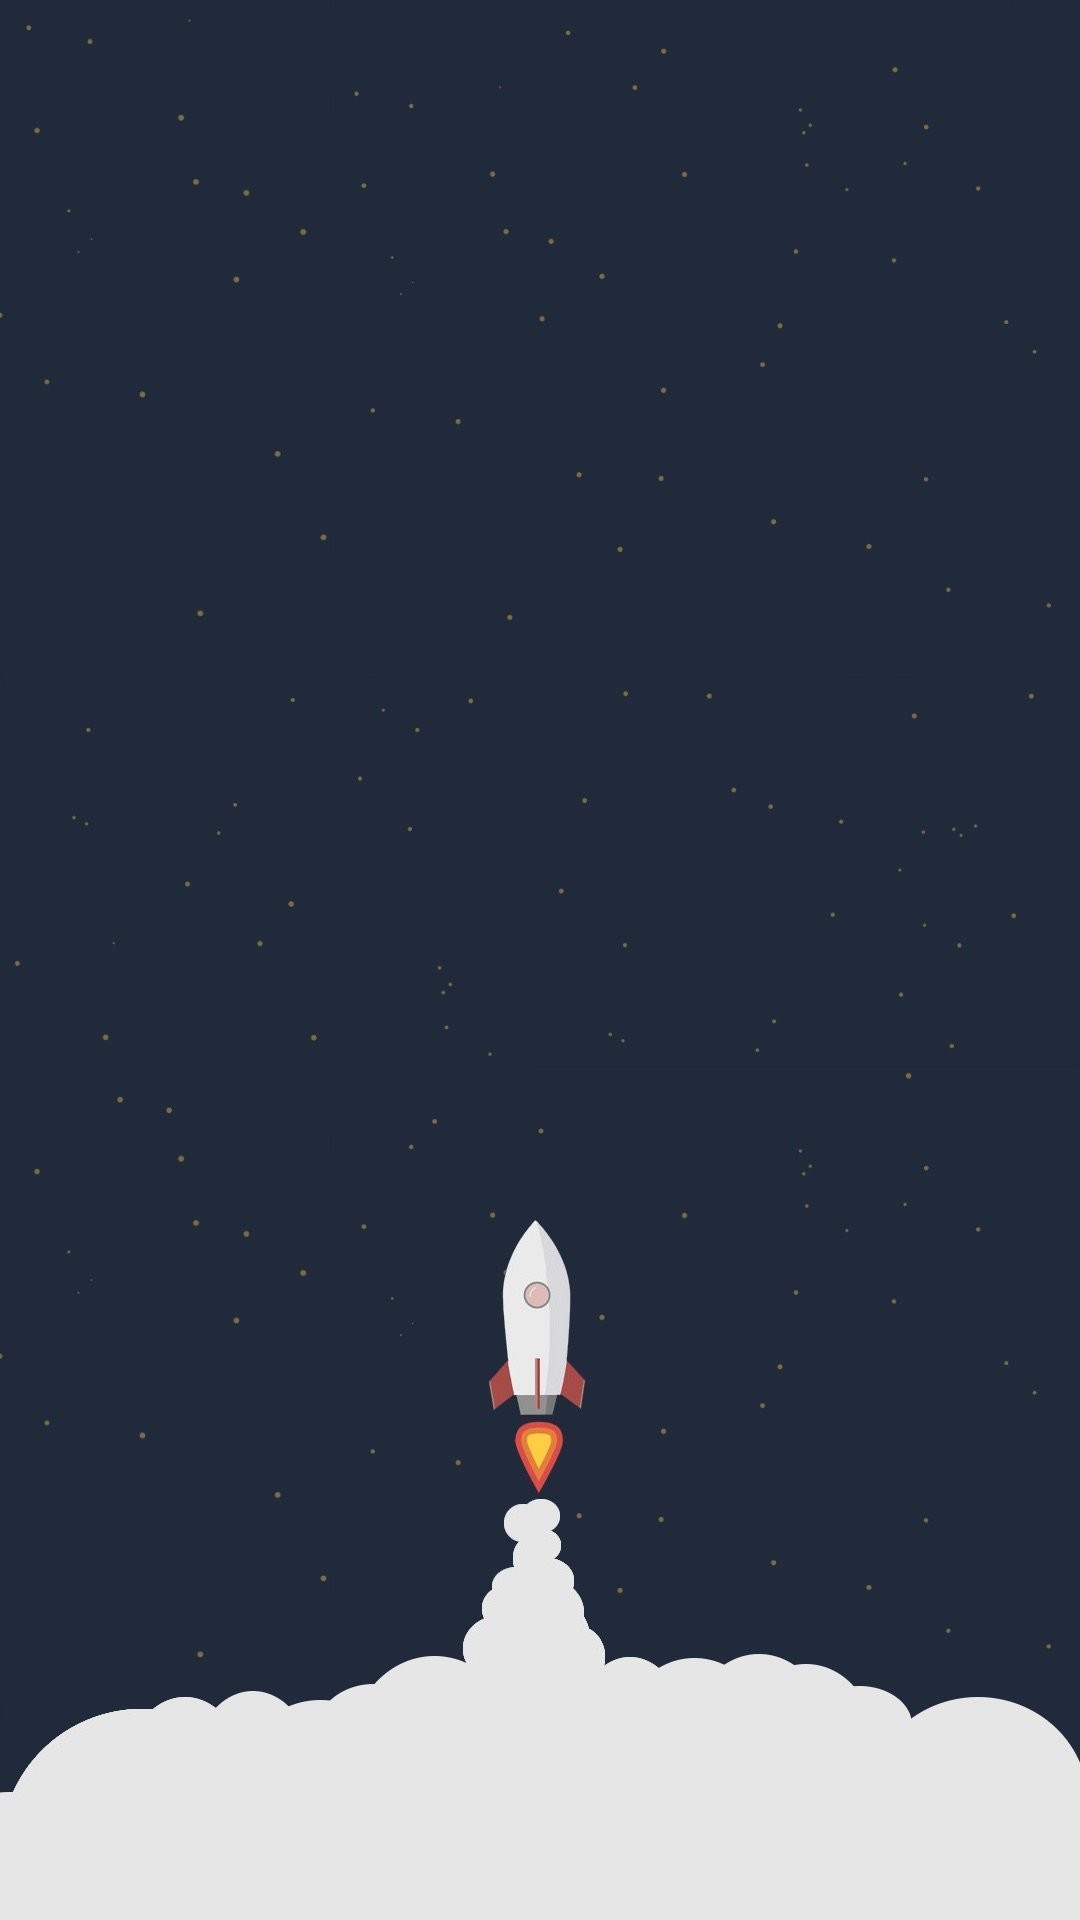 Rocket Liftoff Illustration Iphone 6 Wallpaper 1080x1920